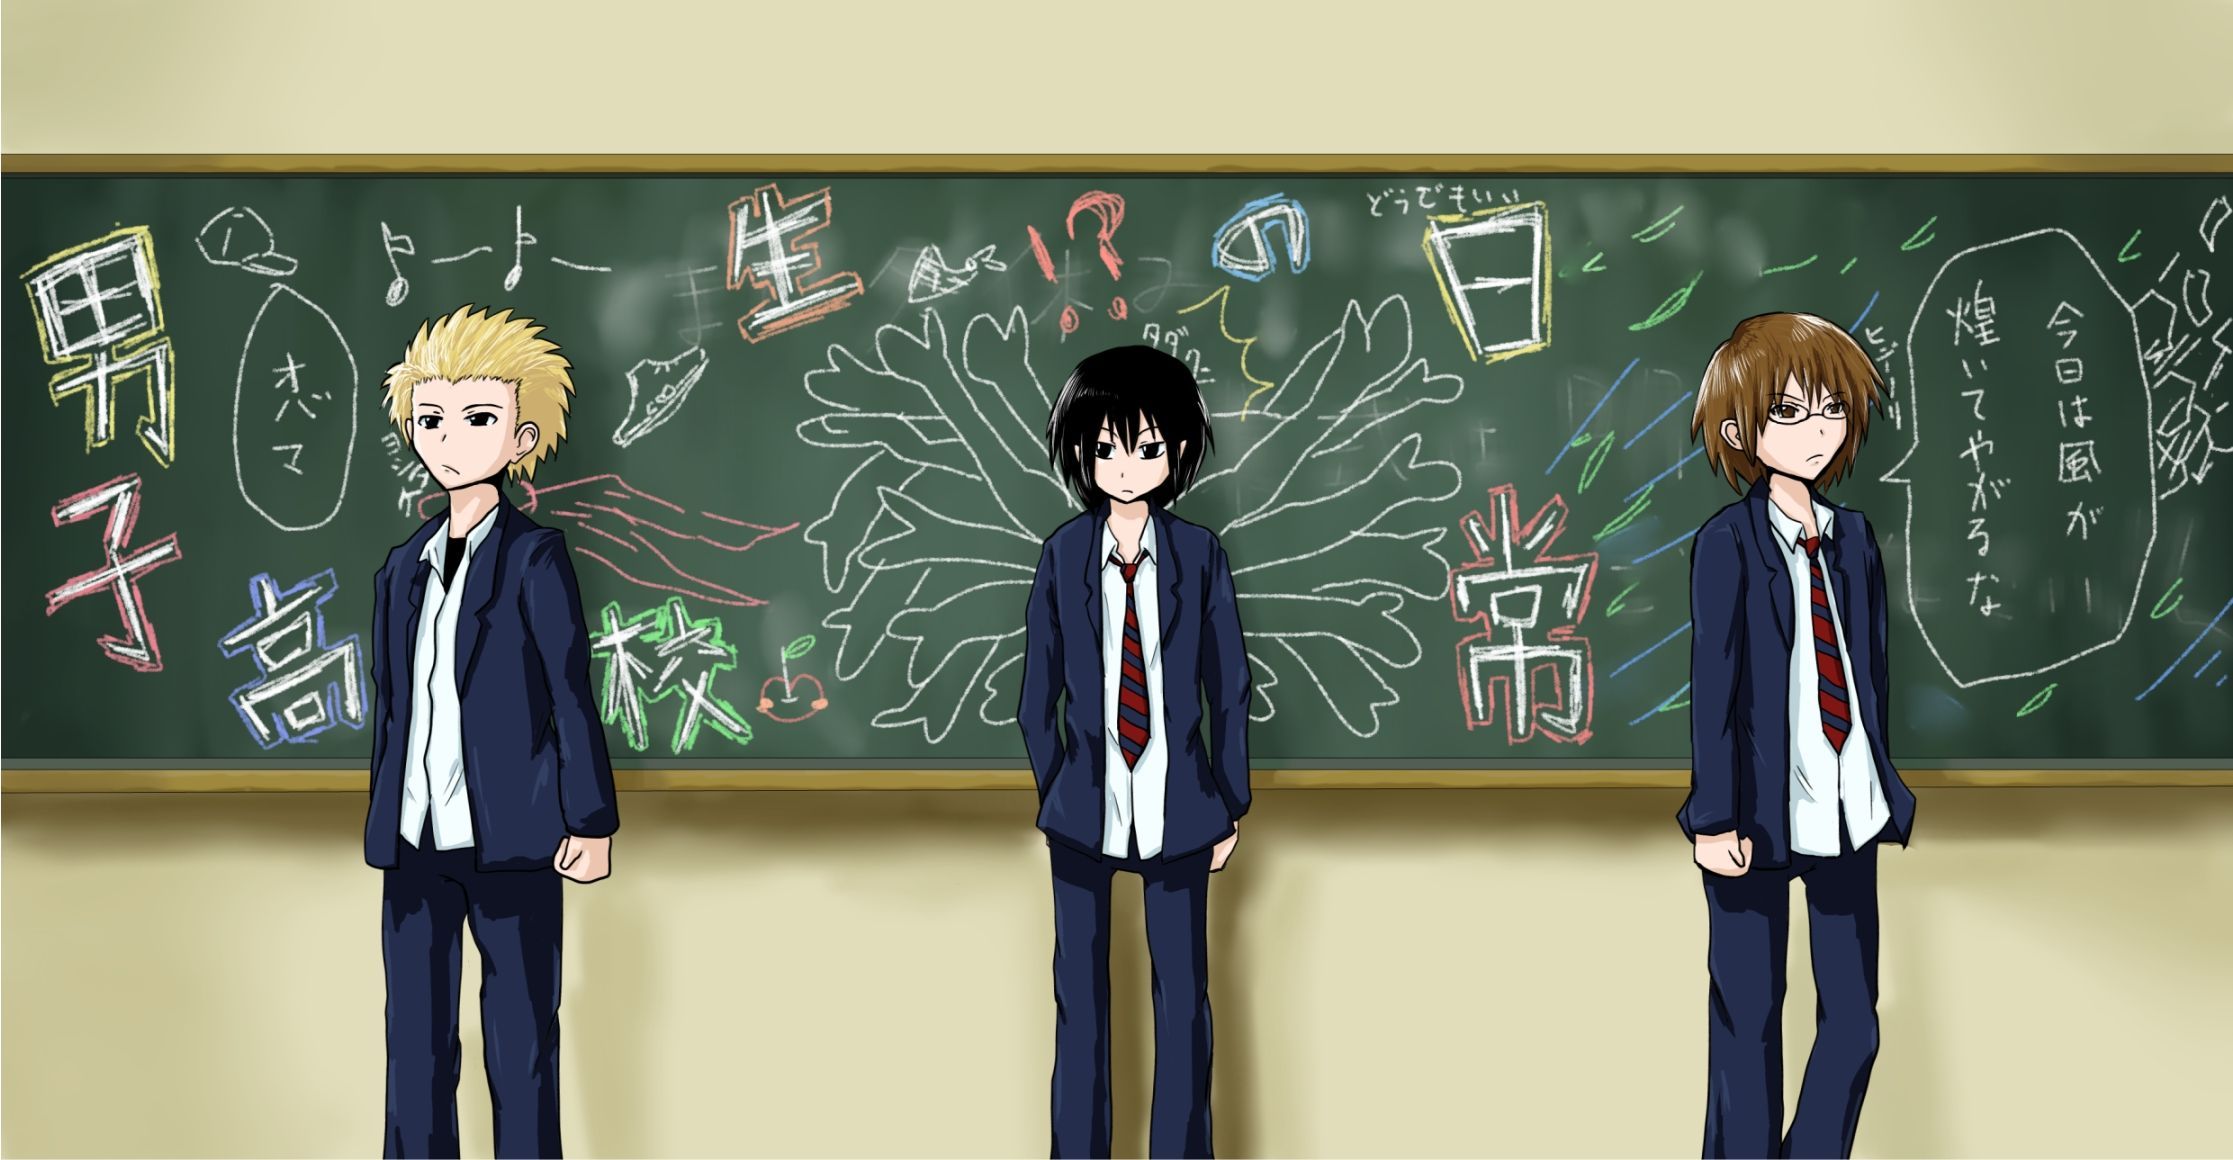 Danshi Koukousei no Nichijou Chalkboard. School boy, Anime